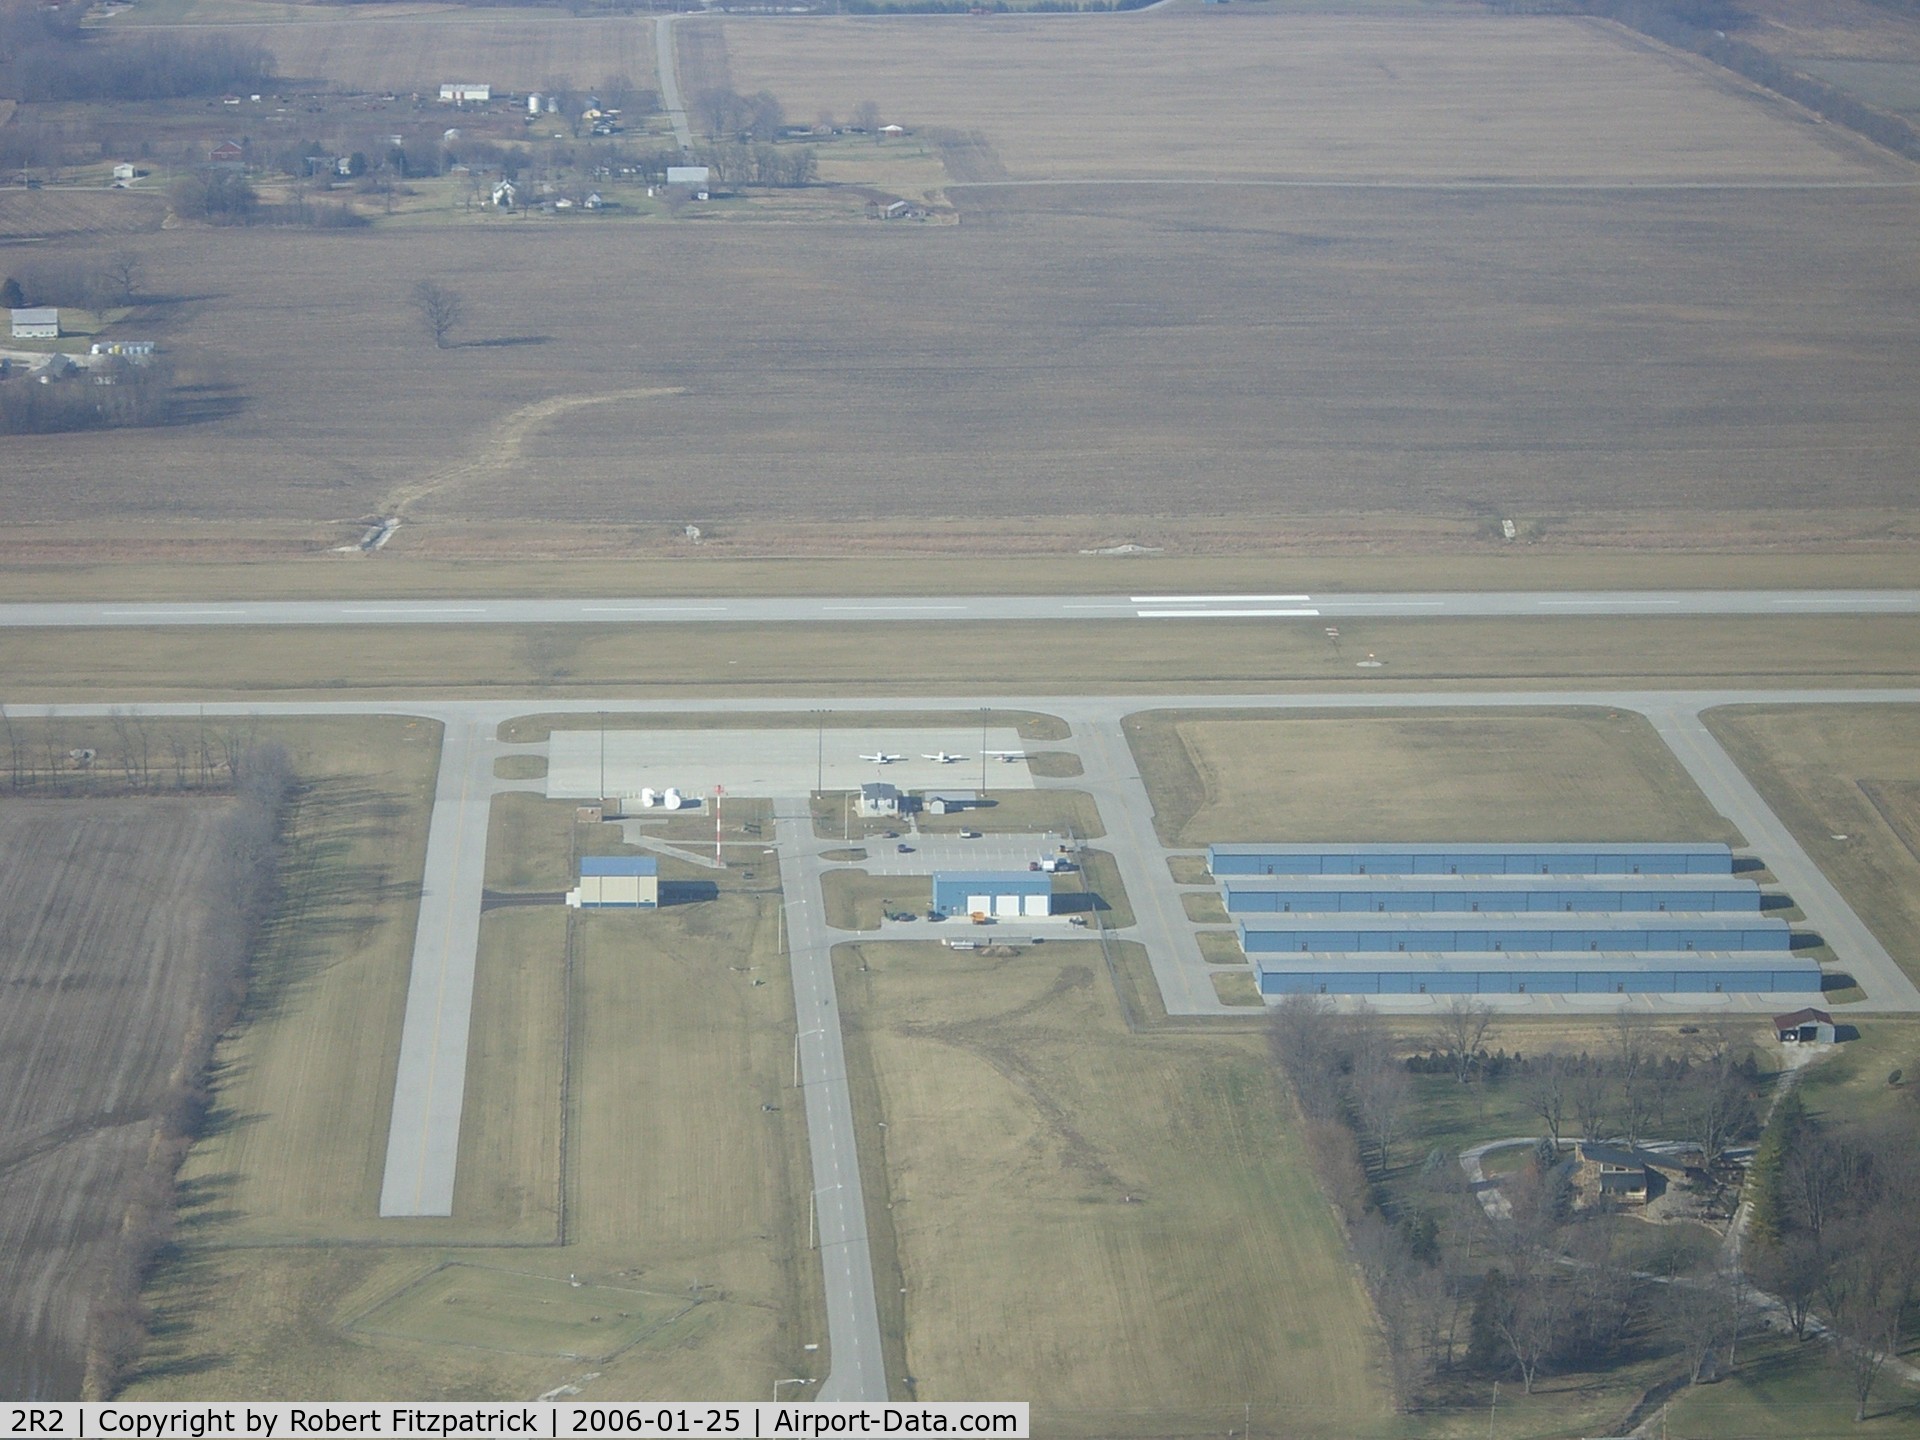 Hendricks County-gordon Graham Fld Airport (2R2) - Aerial shot of FBO